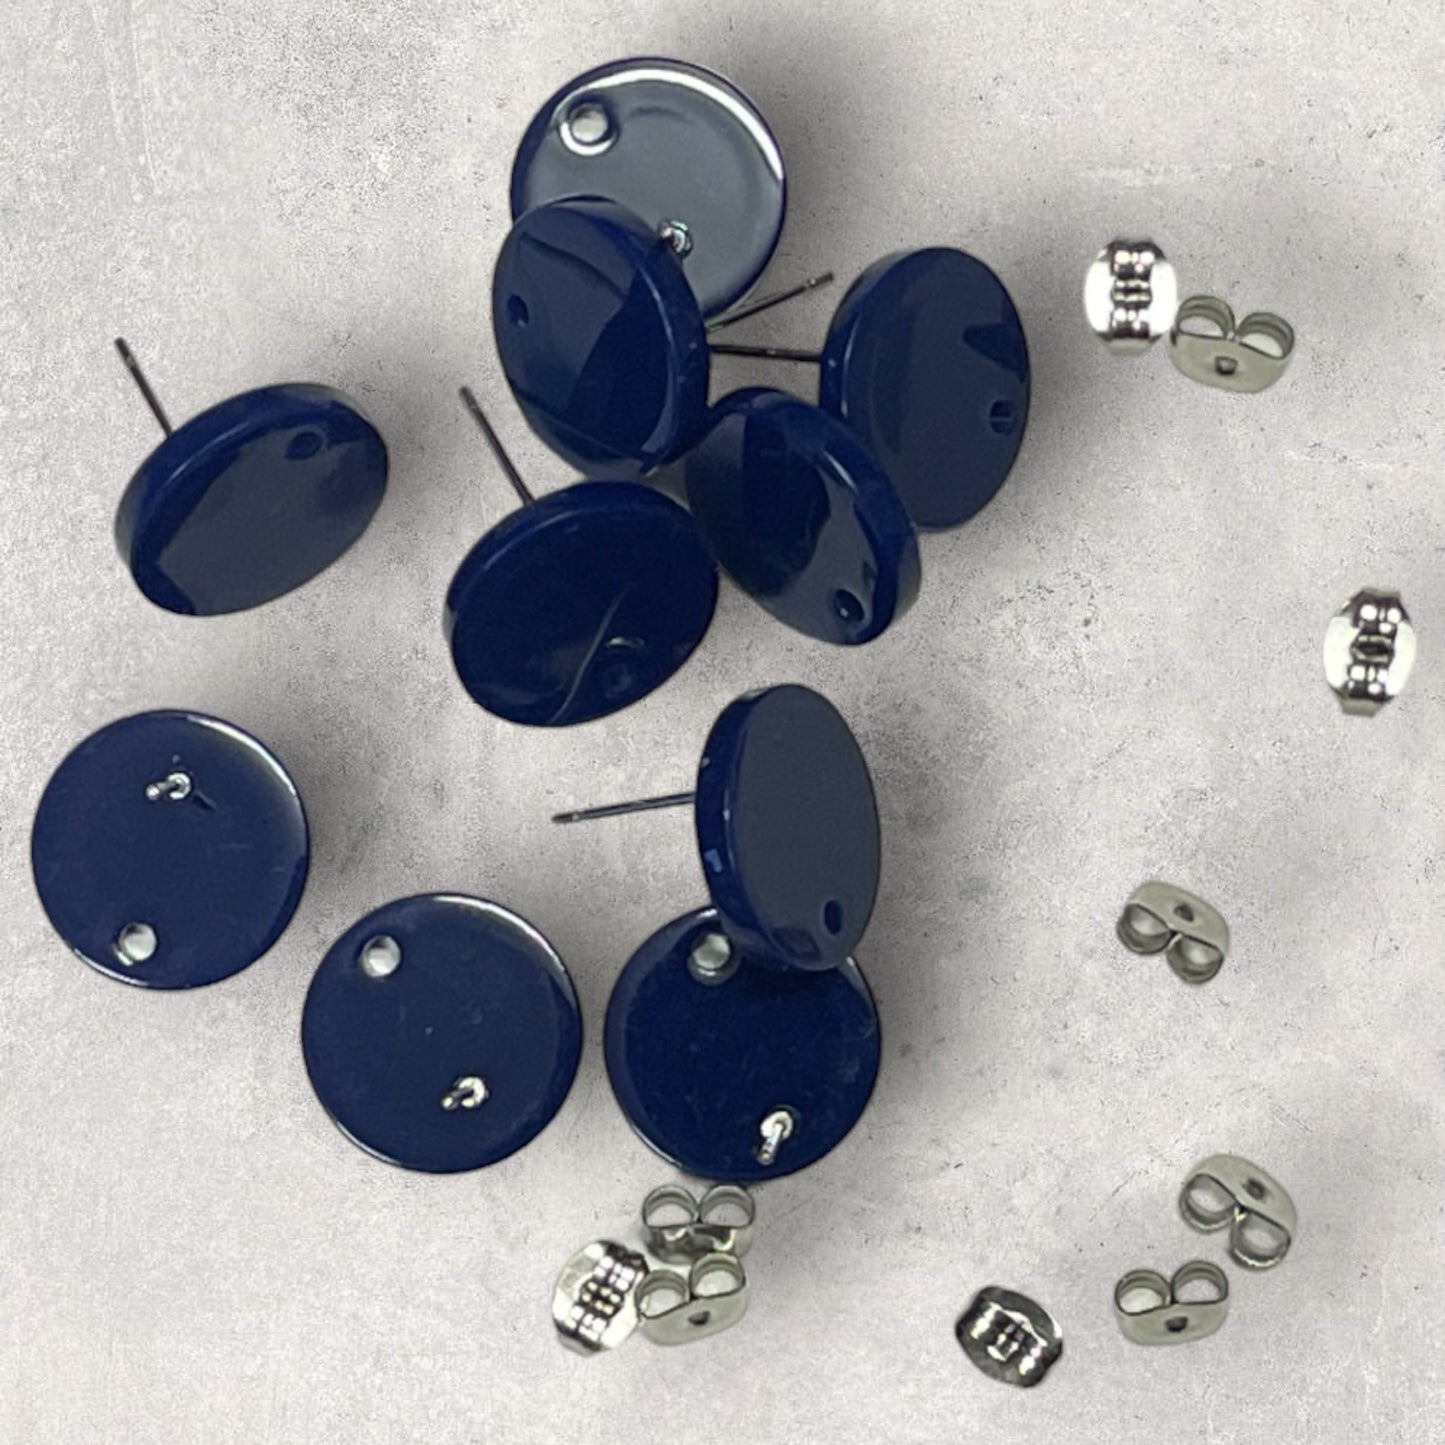 Acrylic Stud Earring - Round Navy Blue - 14mm